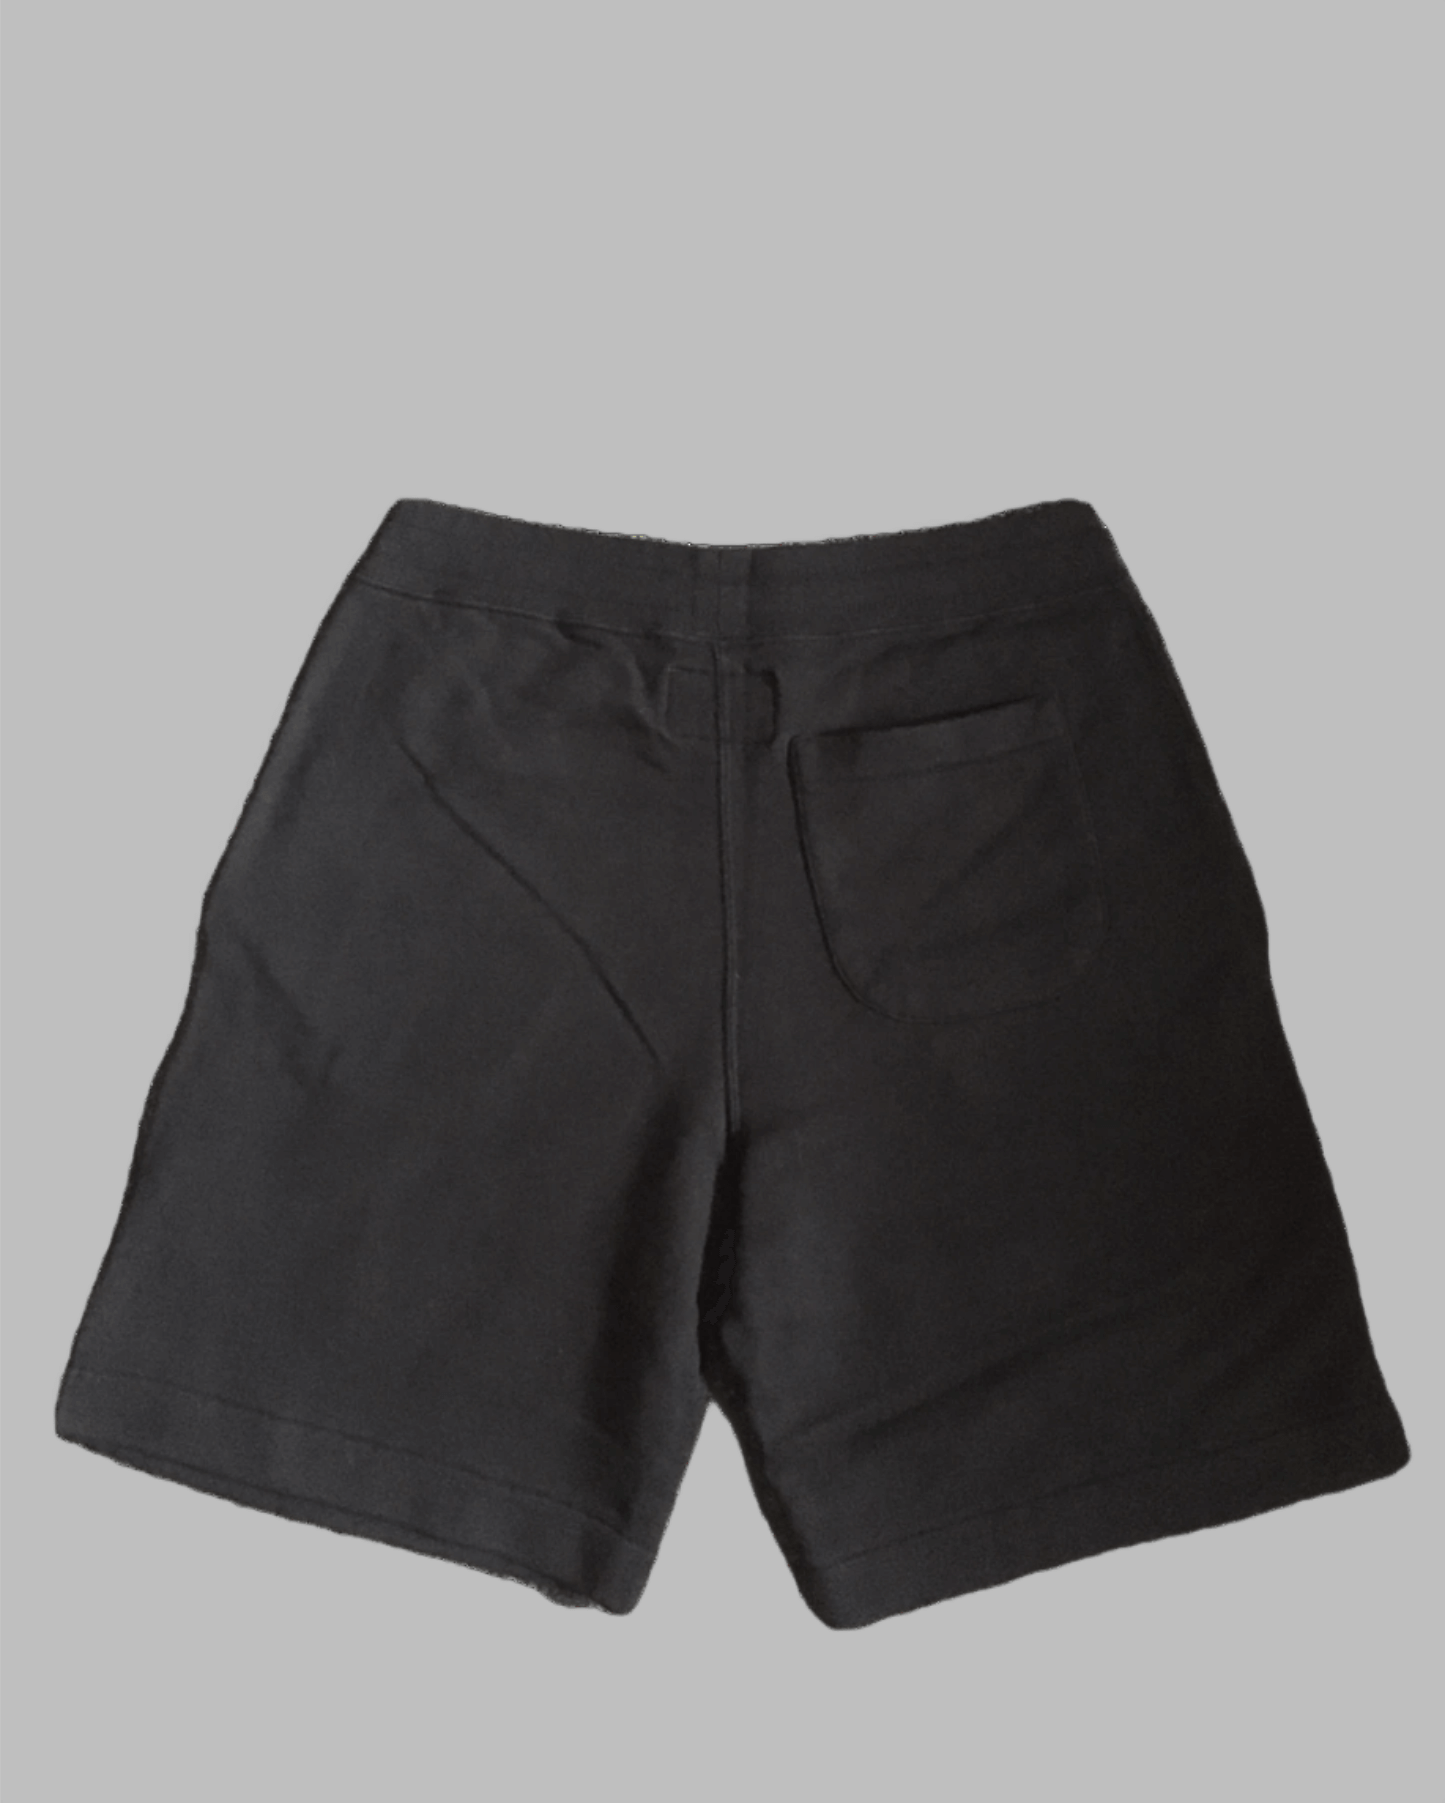 Best Company BC Shorts Black-HALF PRICE!